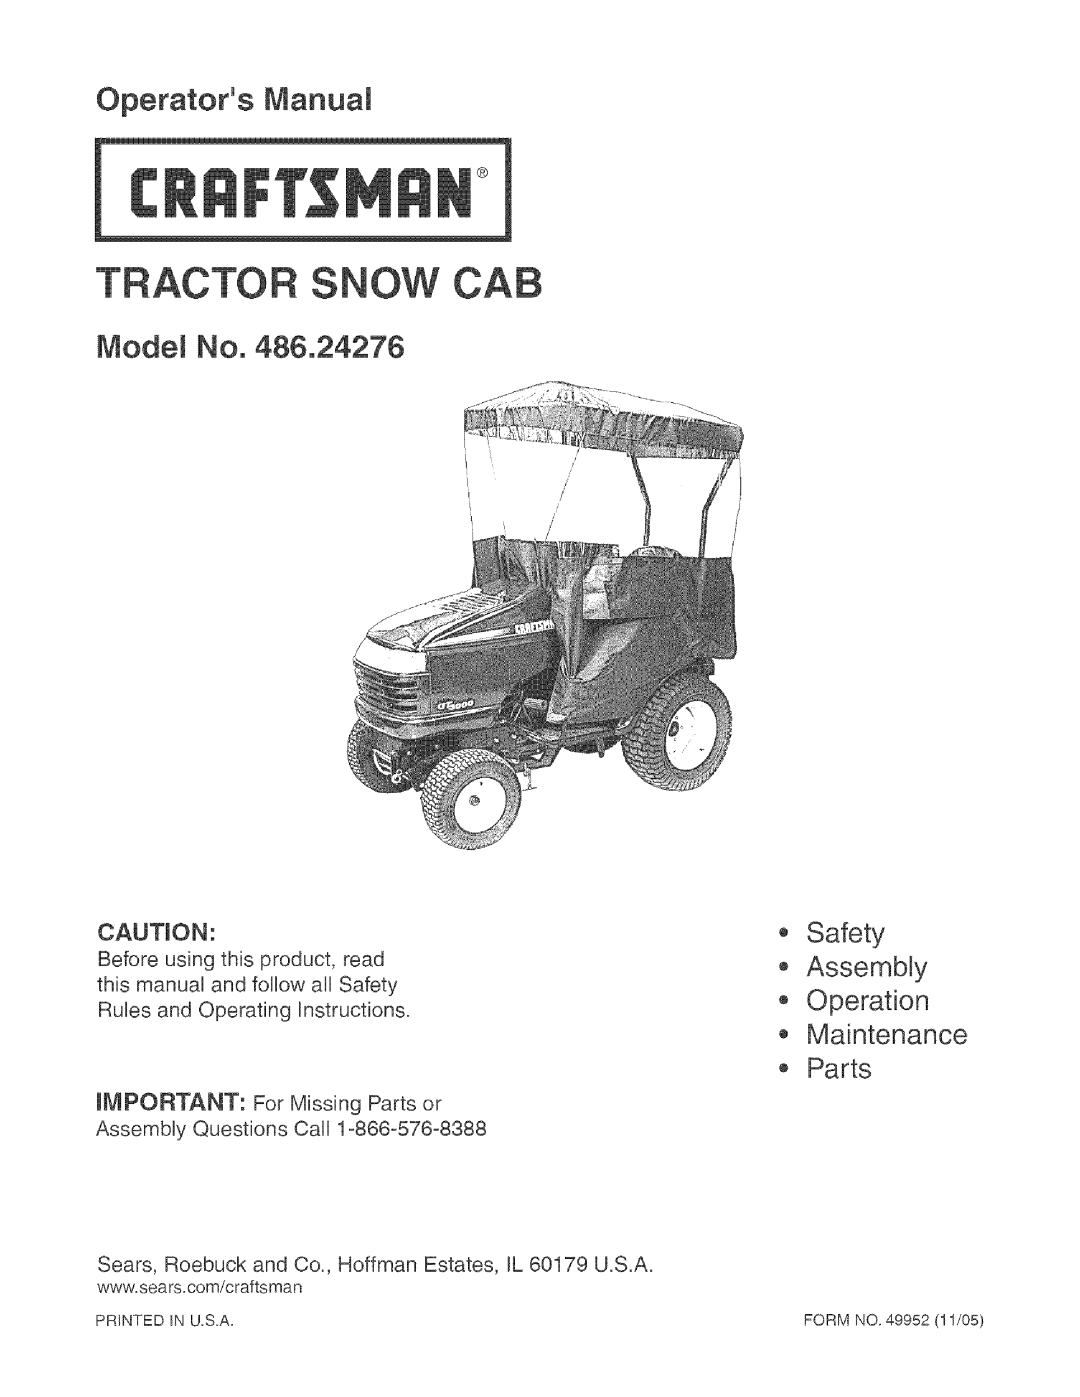 Craftsman 486.24276 manual Operators Manual, Mode No, Safety AssembLy Operation Maintenance Parts 